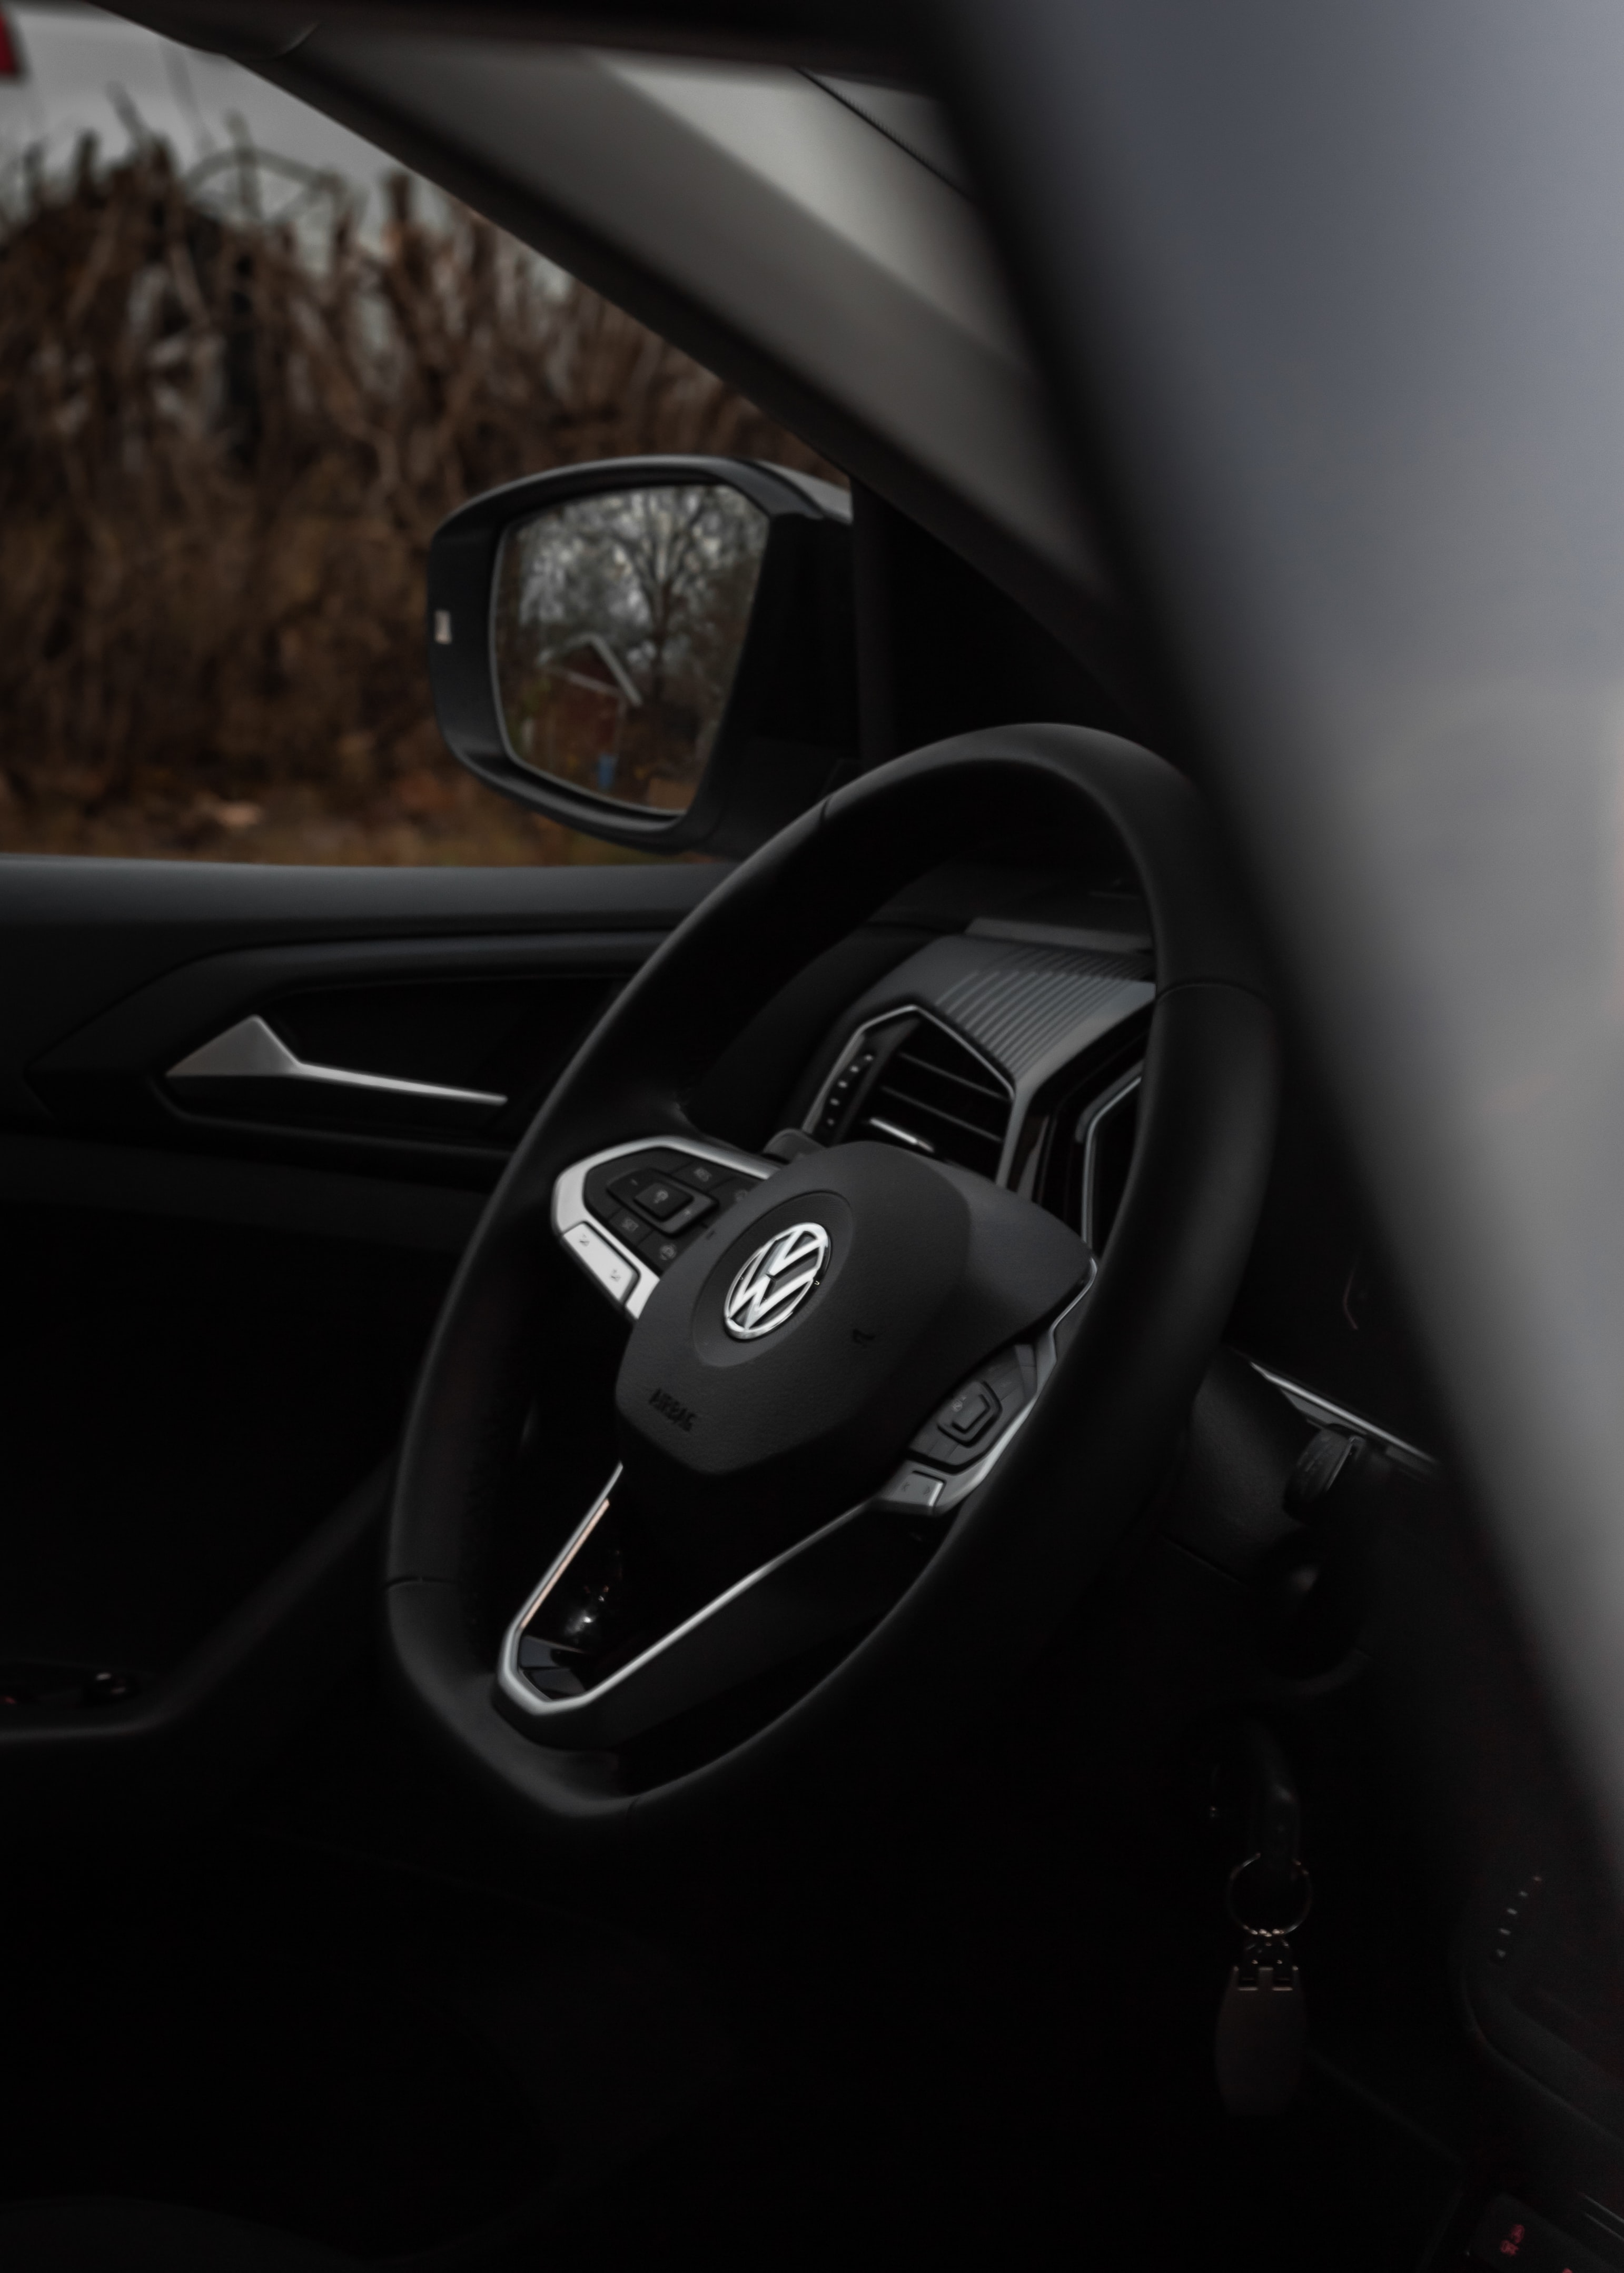 volkswagen, rudder, steering wheel, black, cars, car phone background